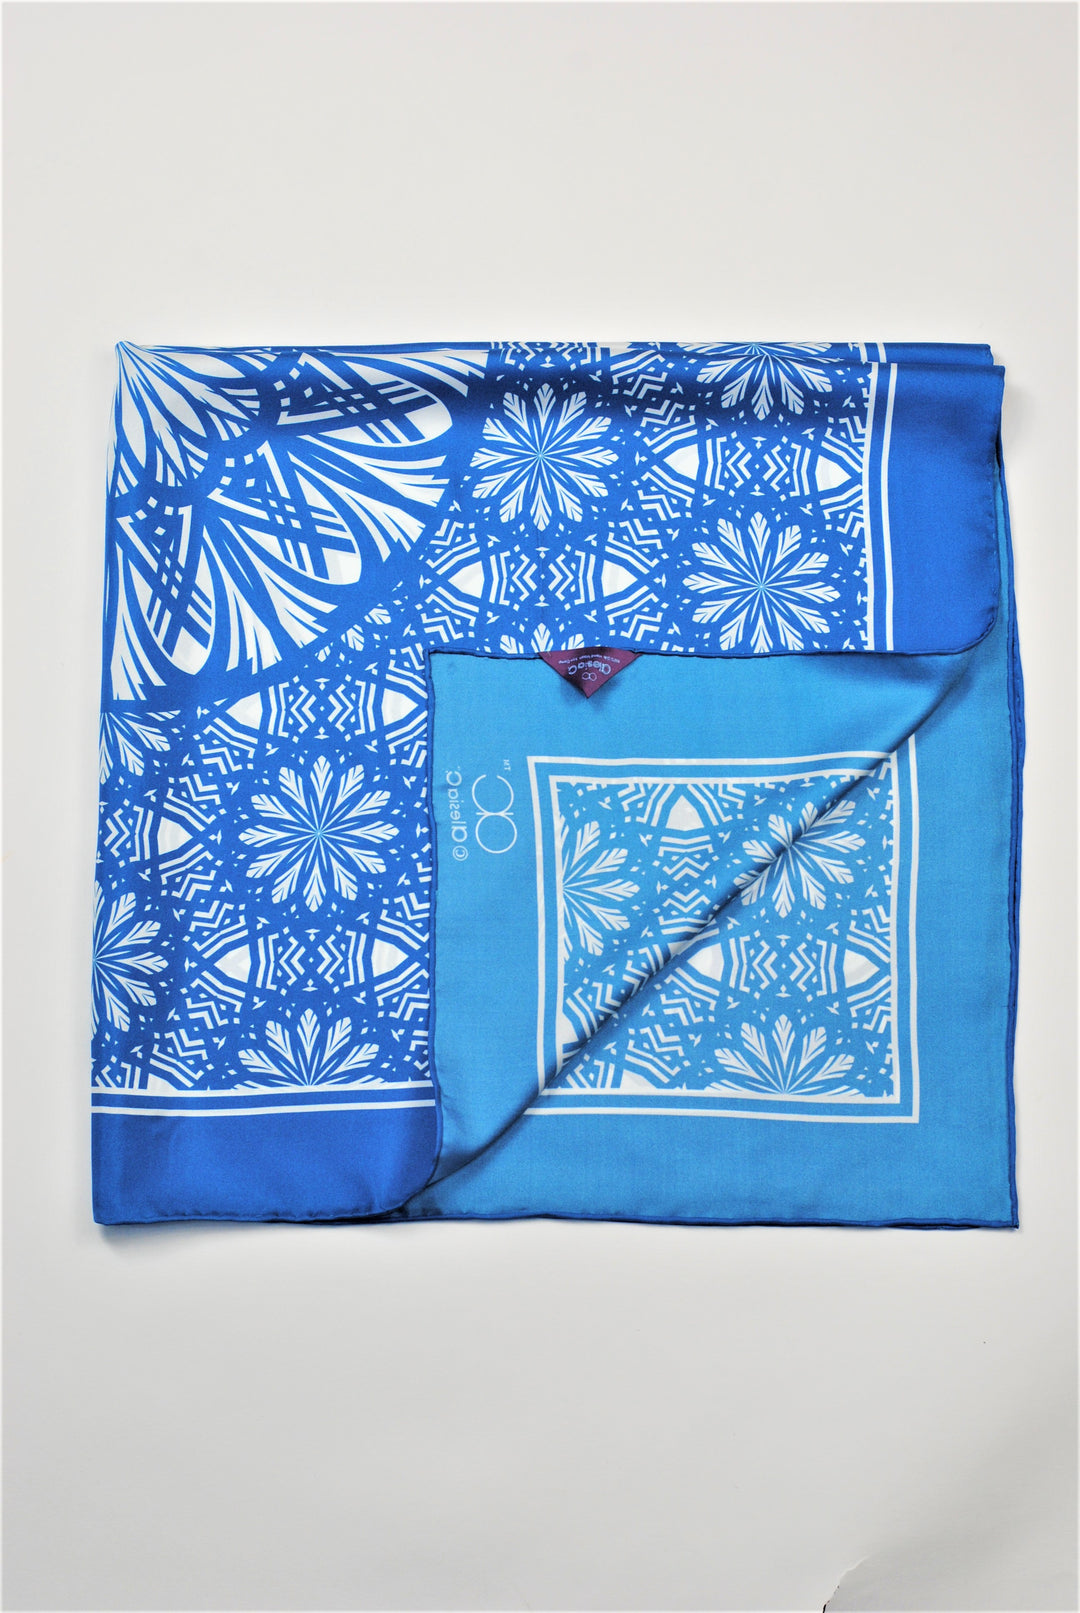 SERENITY Mandala Art Pure Silk Scarf in Blue White Alesia C.